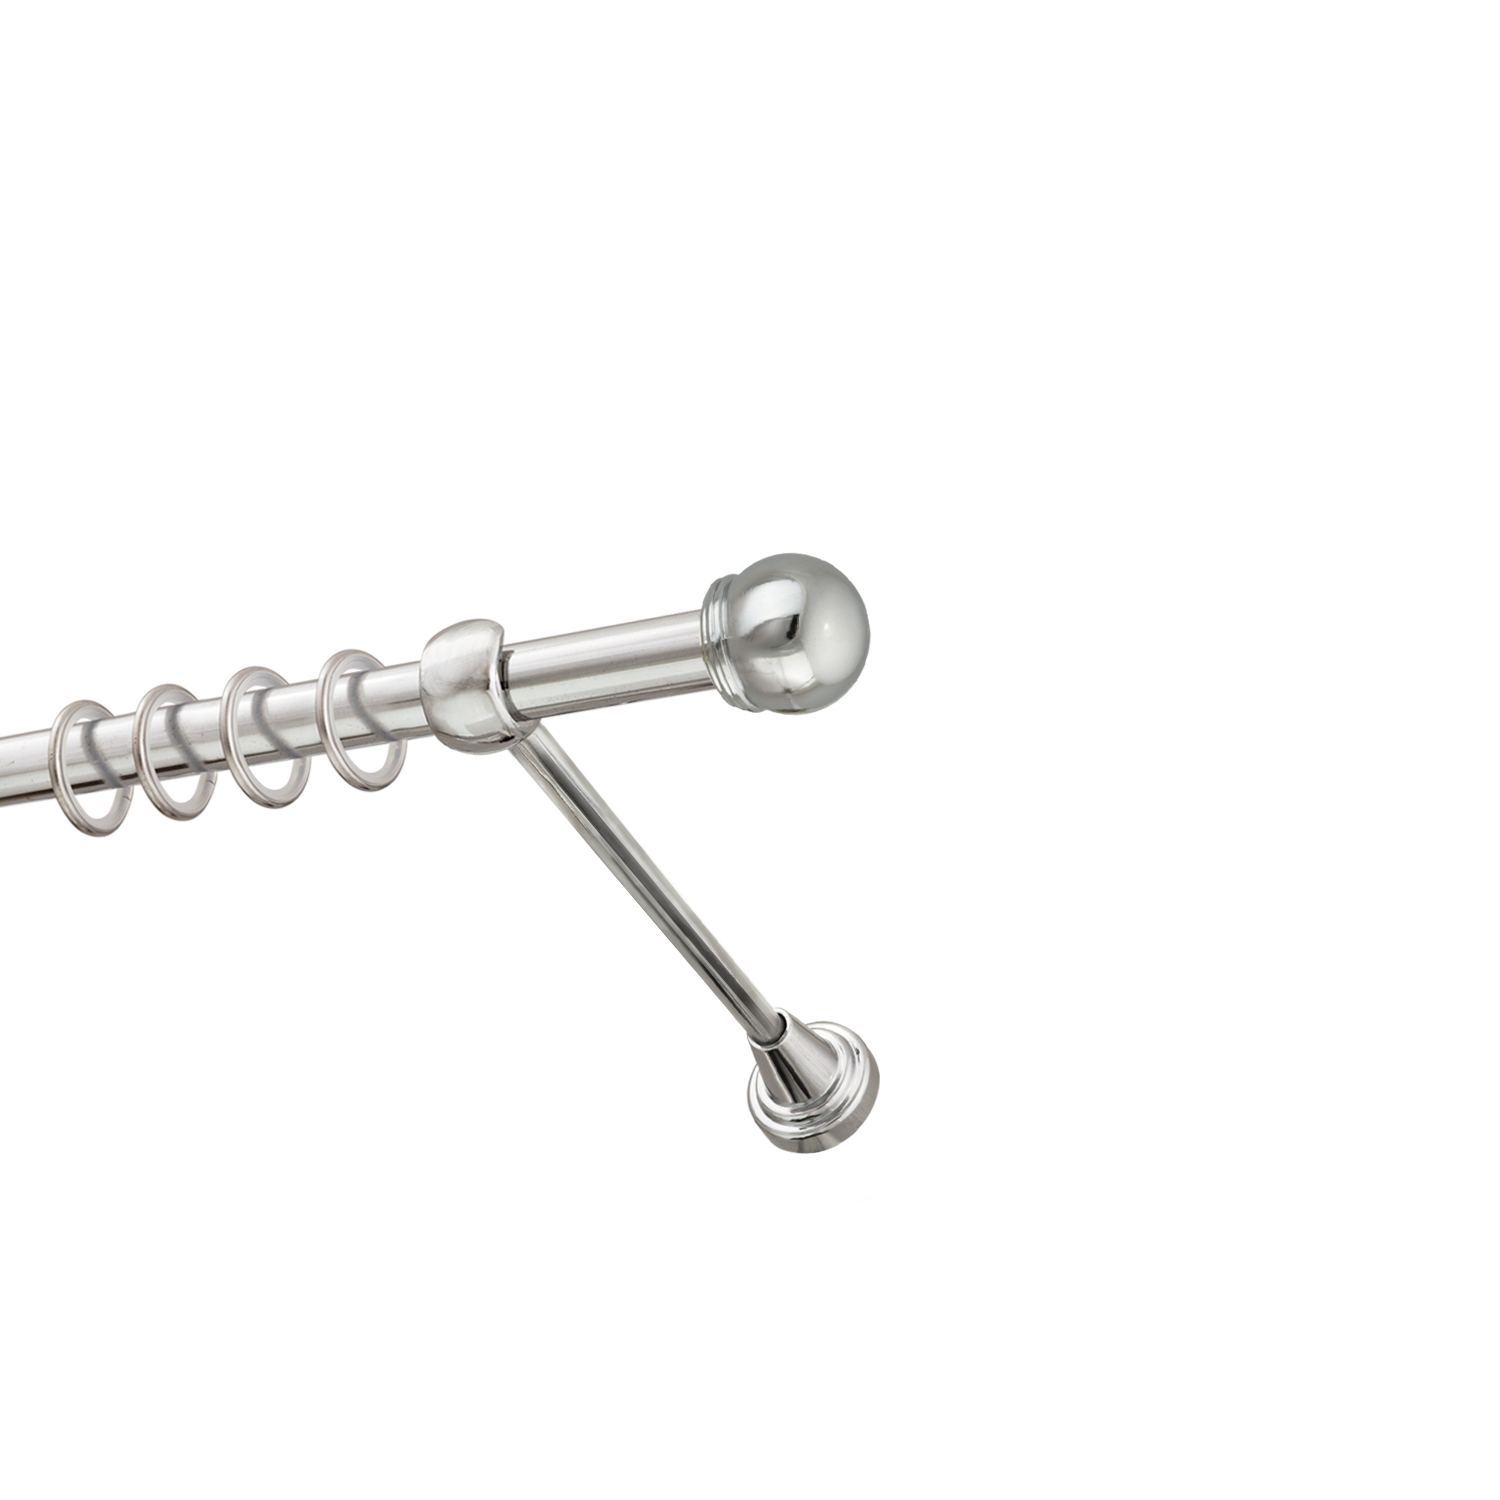 Металлический карниз для штор Вива, однорядный 16 мм, серебро, гладкая штанга, длина 300 см - фото Wikidecor.ru